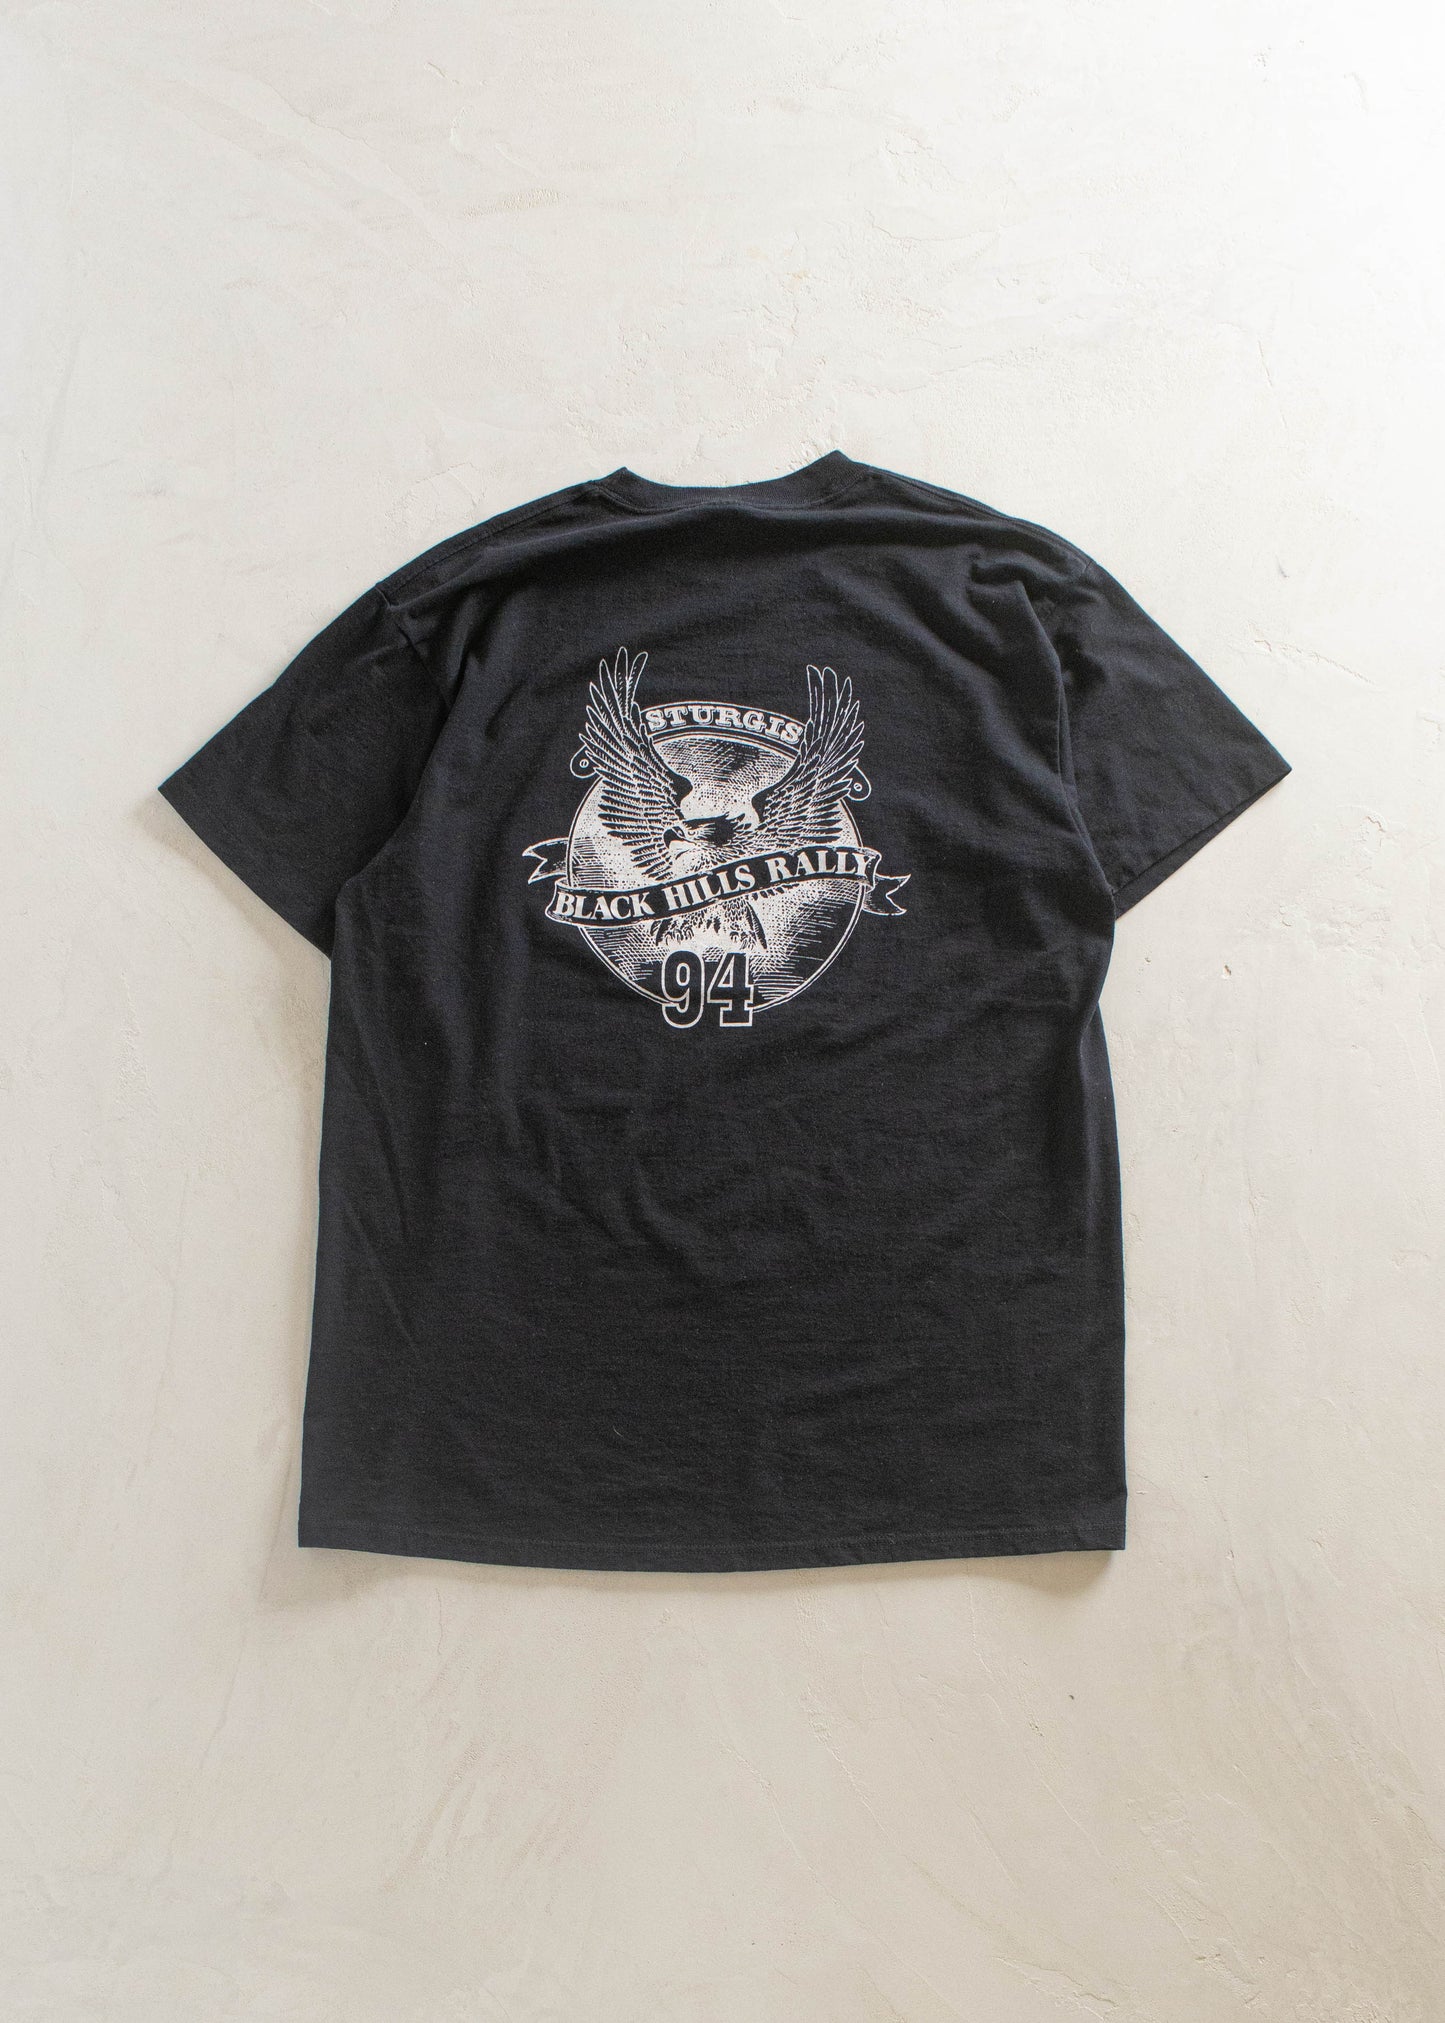 1992 3D Emblem Harley Davidson T-Shirt Size L/XL